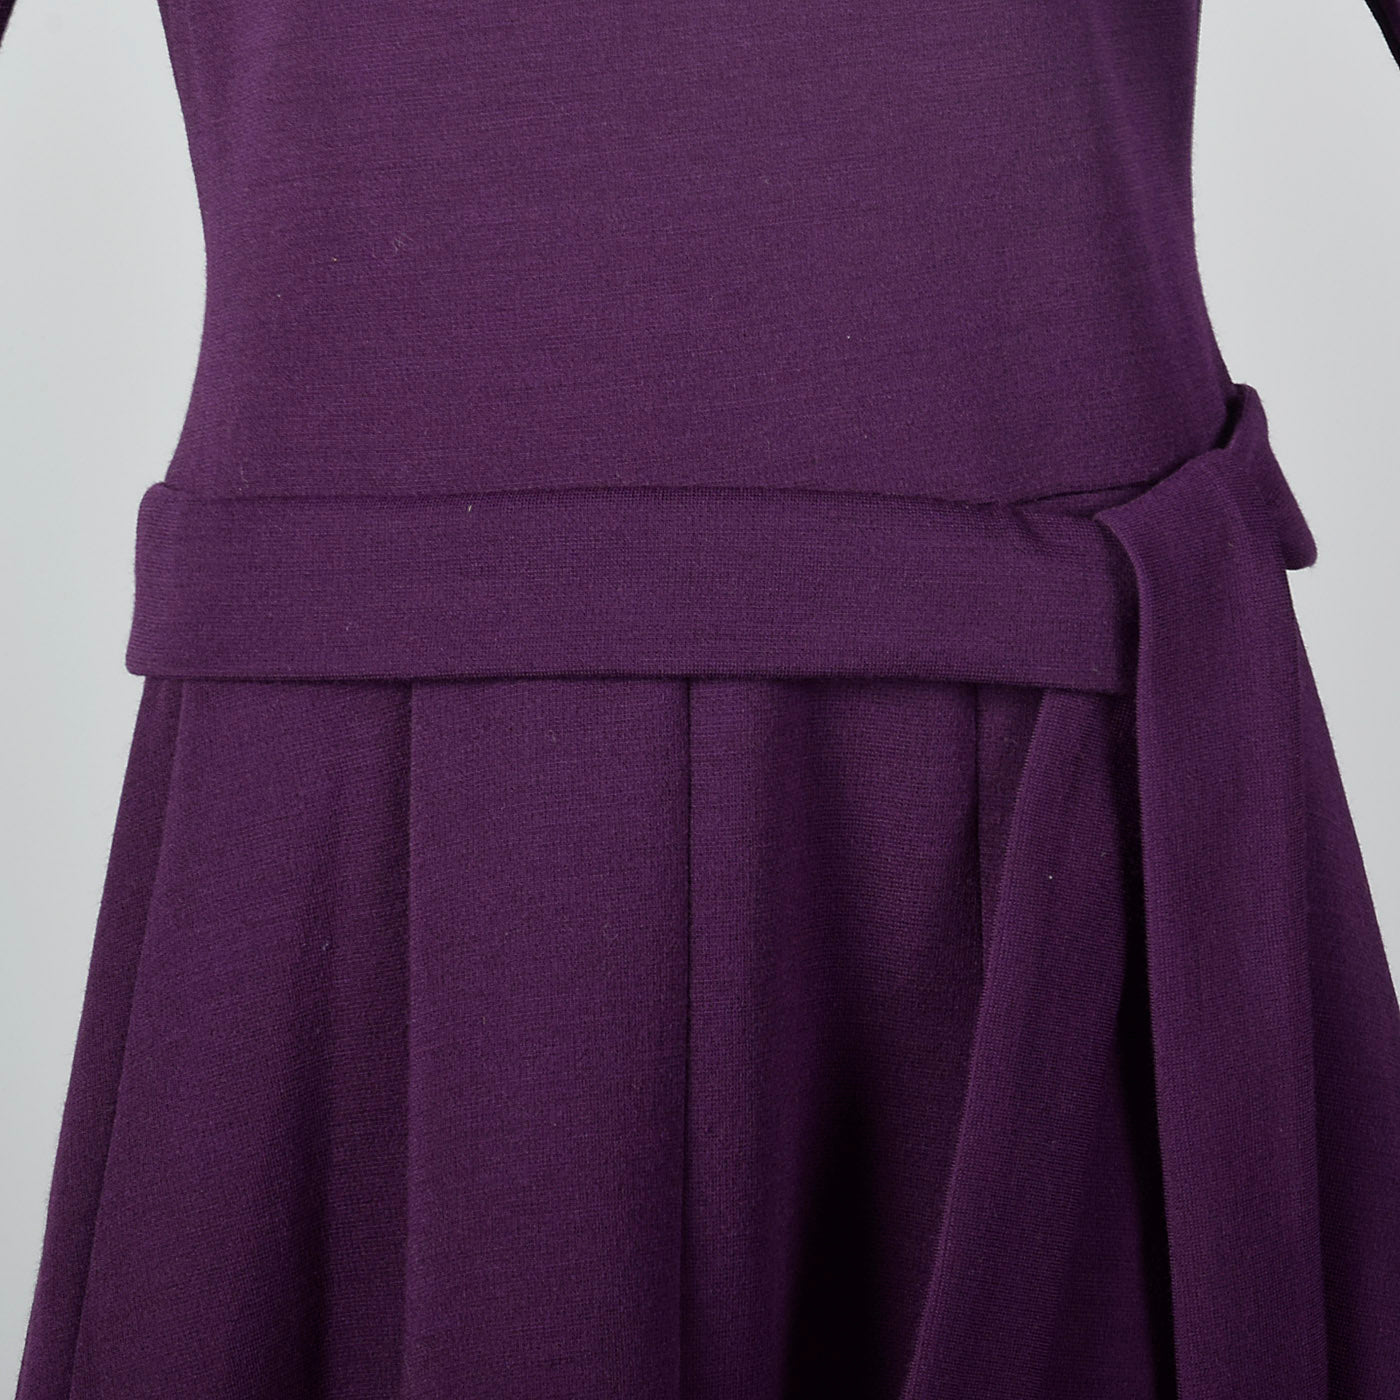 1960s Purple Knit Dress with Dropped Waist